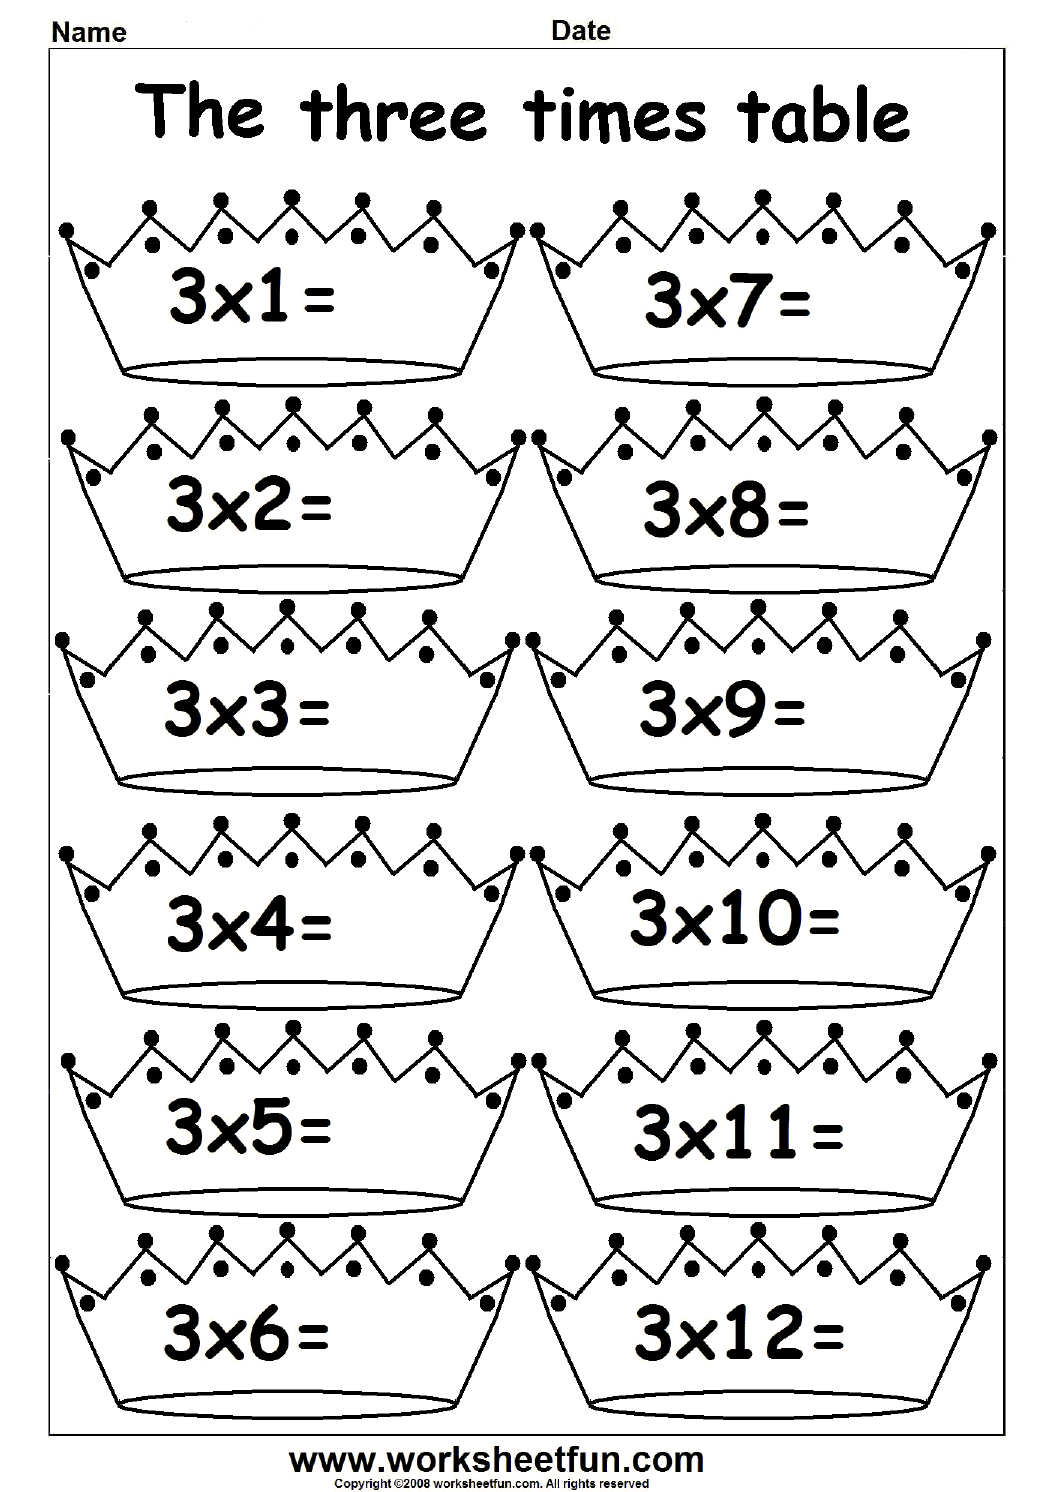 multiplication-times-tables-worksheets-2-3-4-6-7-8-9-10-11-12-13-14-15-16-17-18